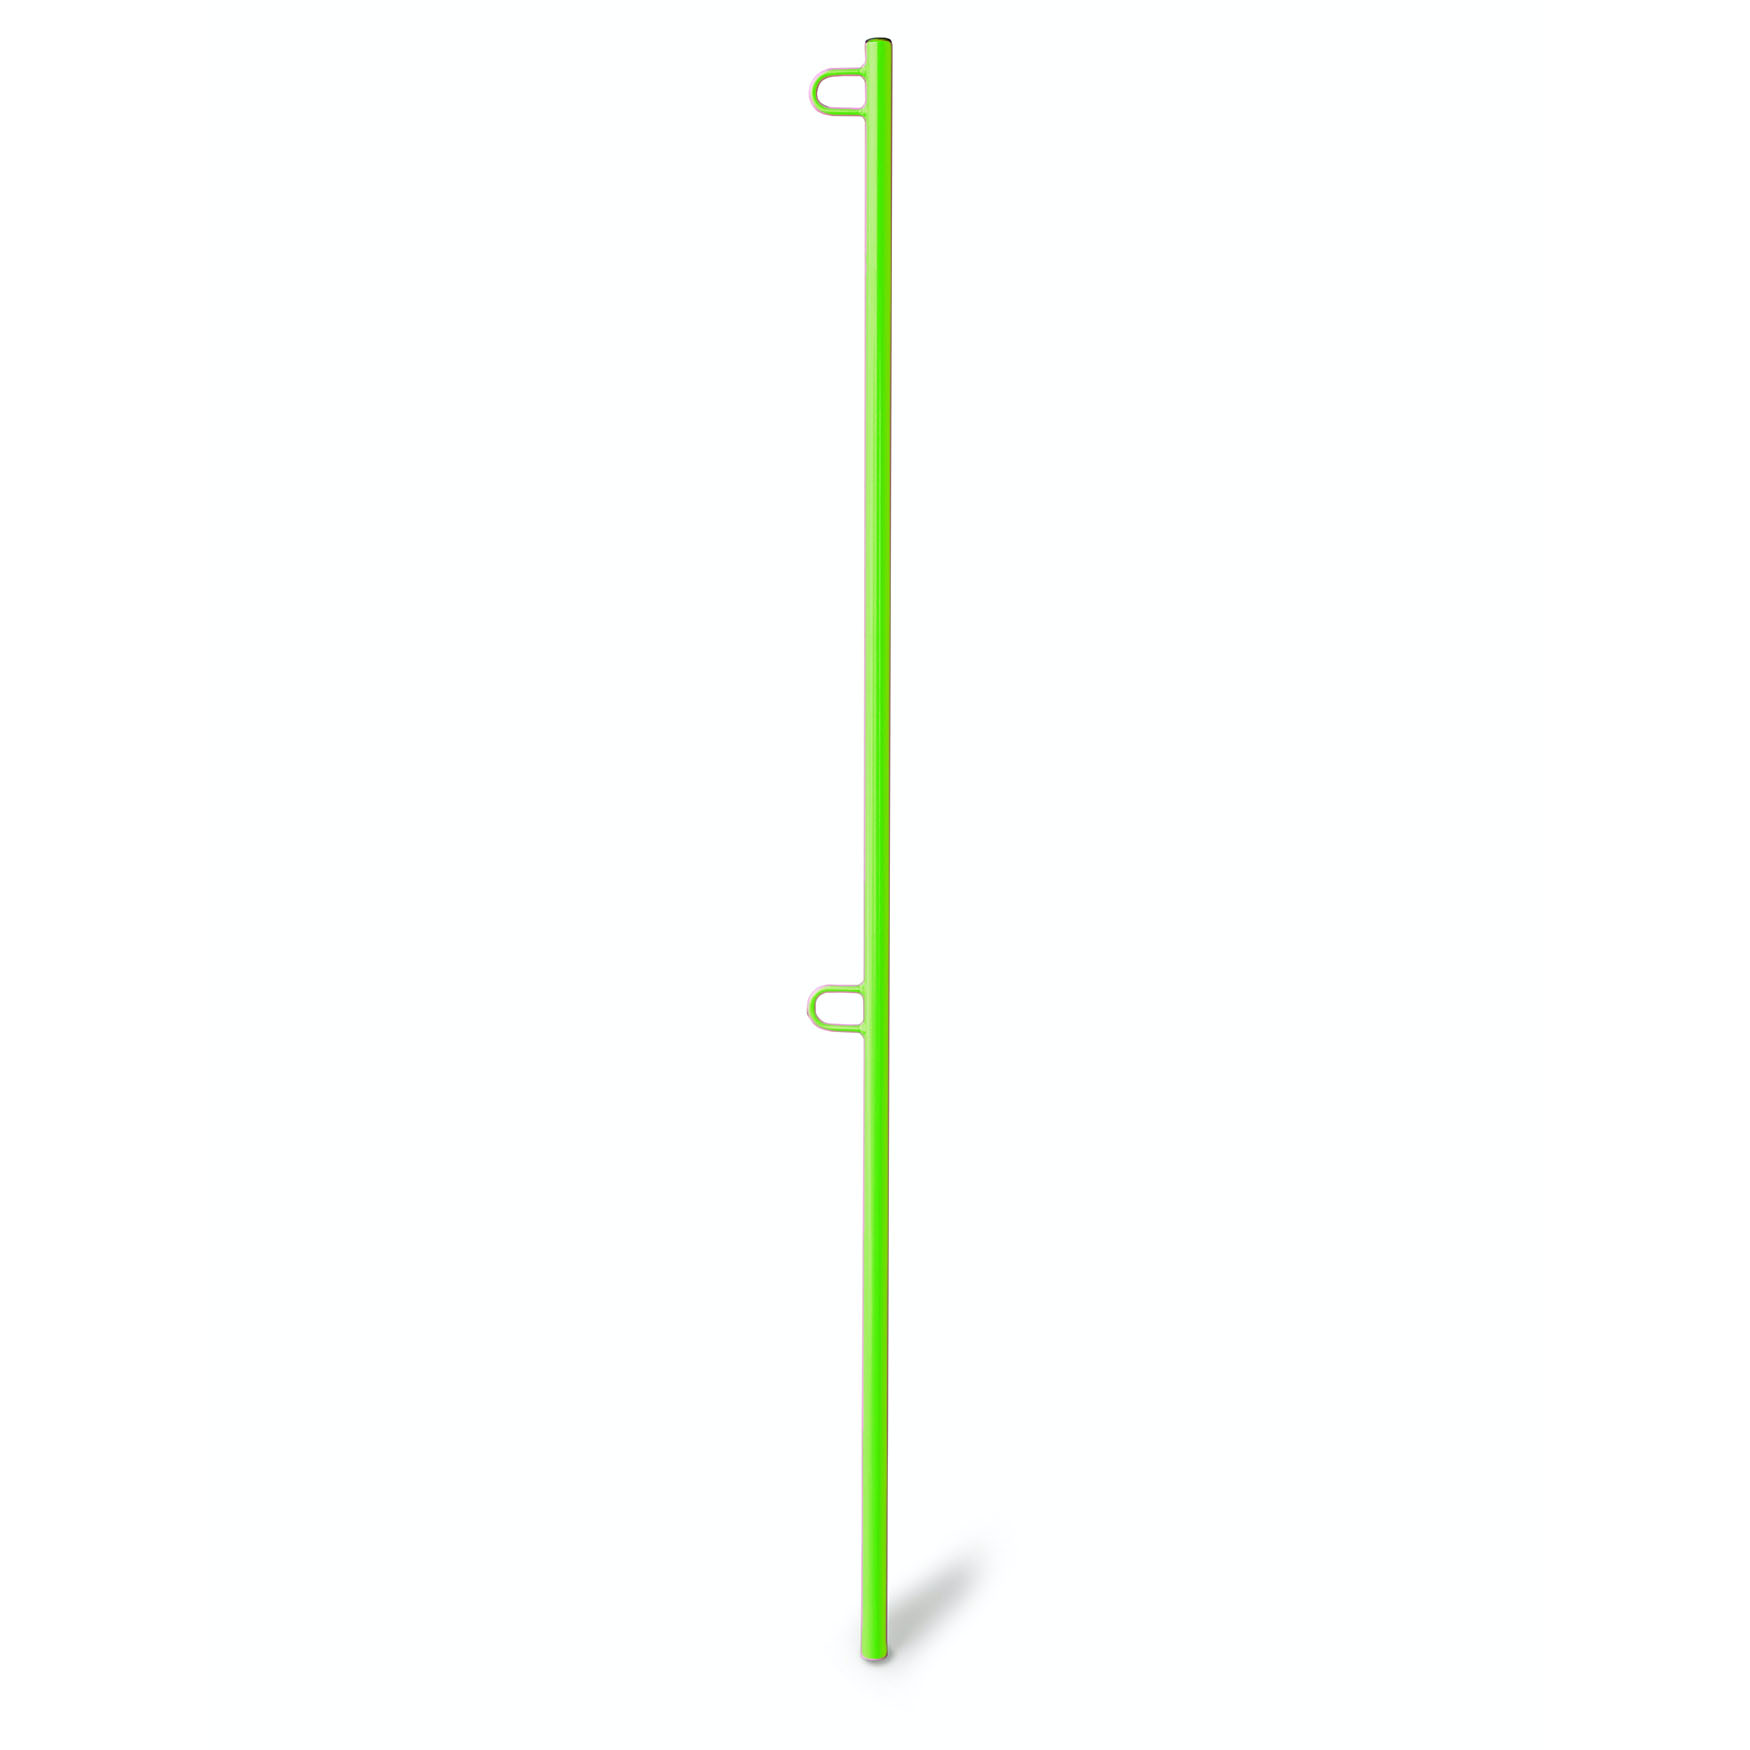 Flag Pole 5.0 feet Neon Green